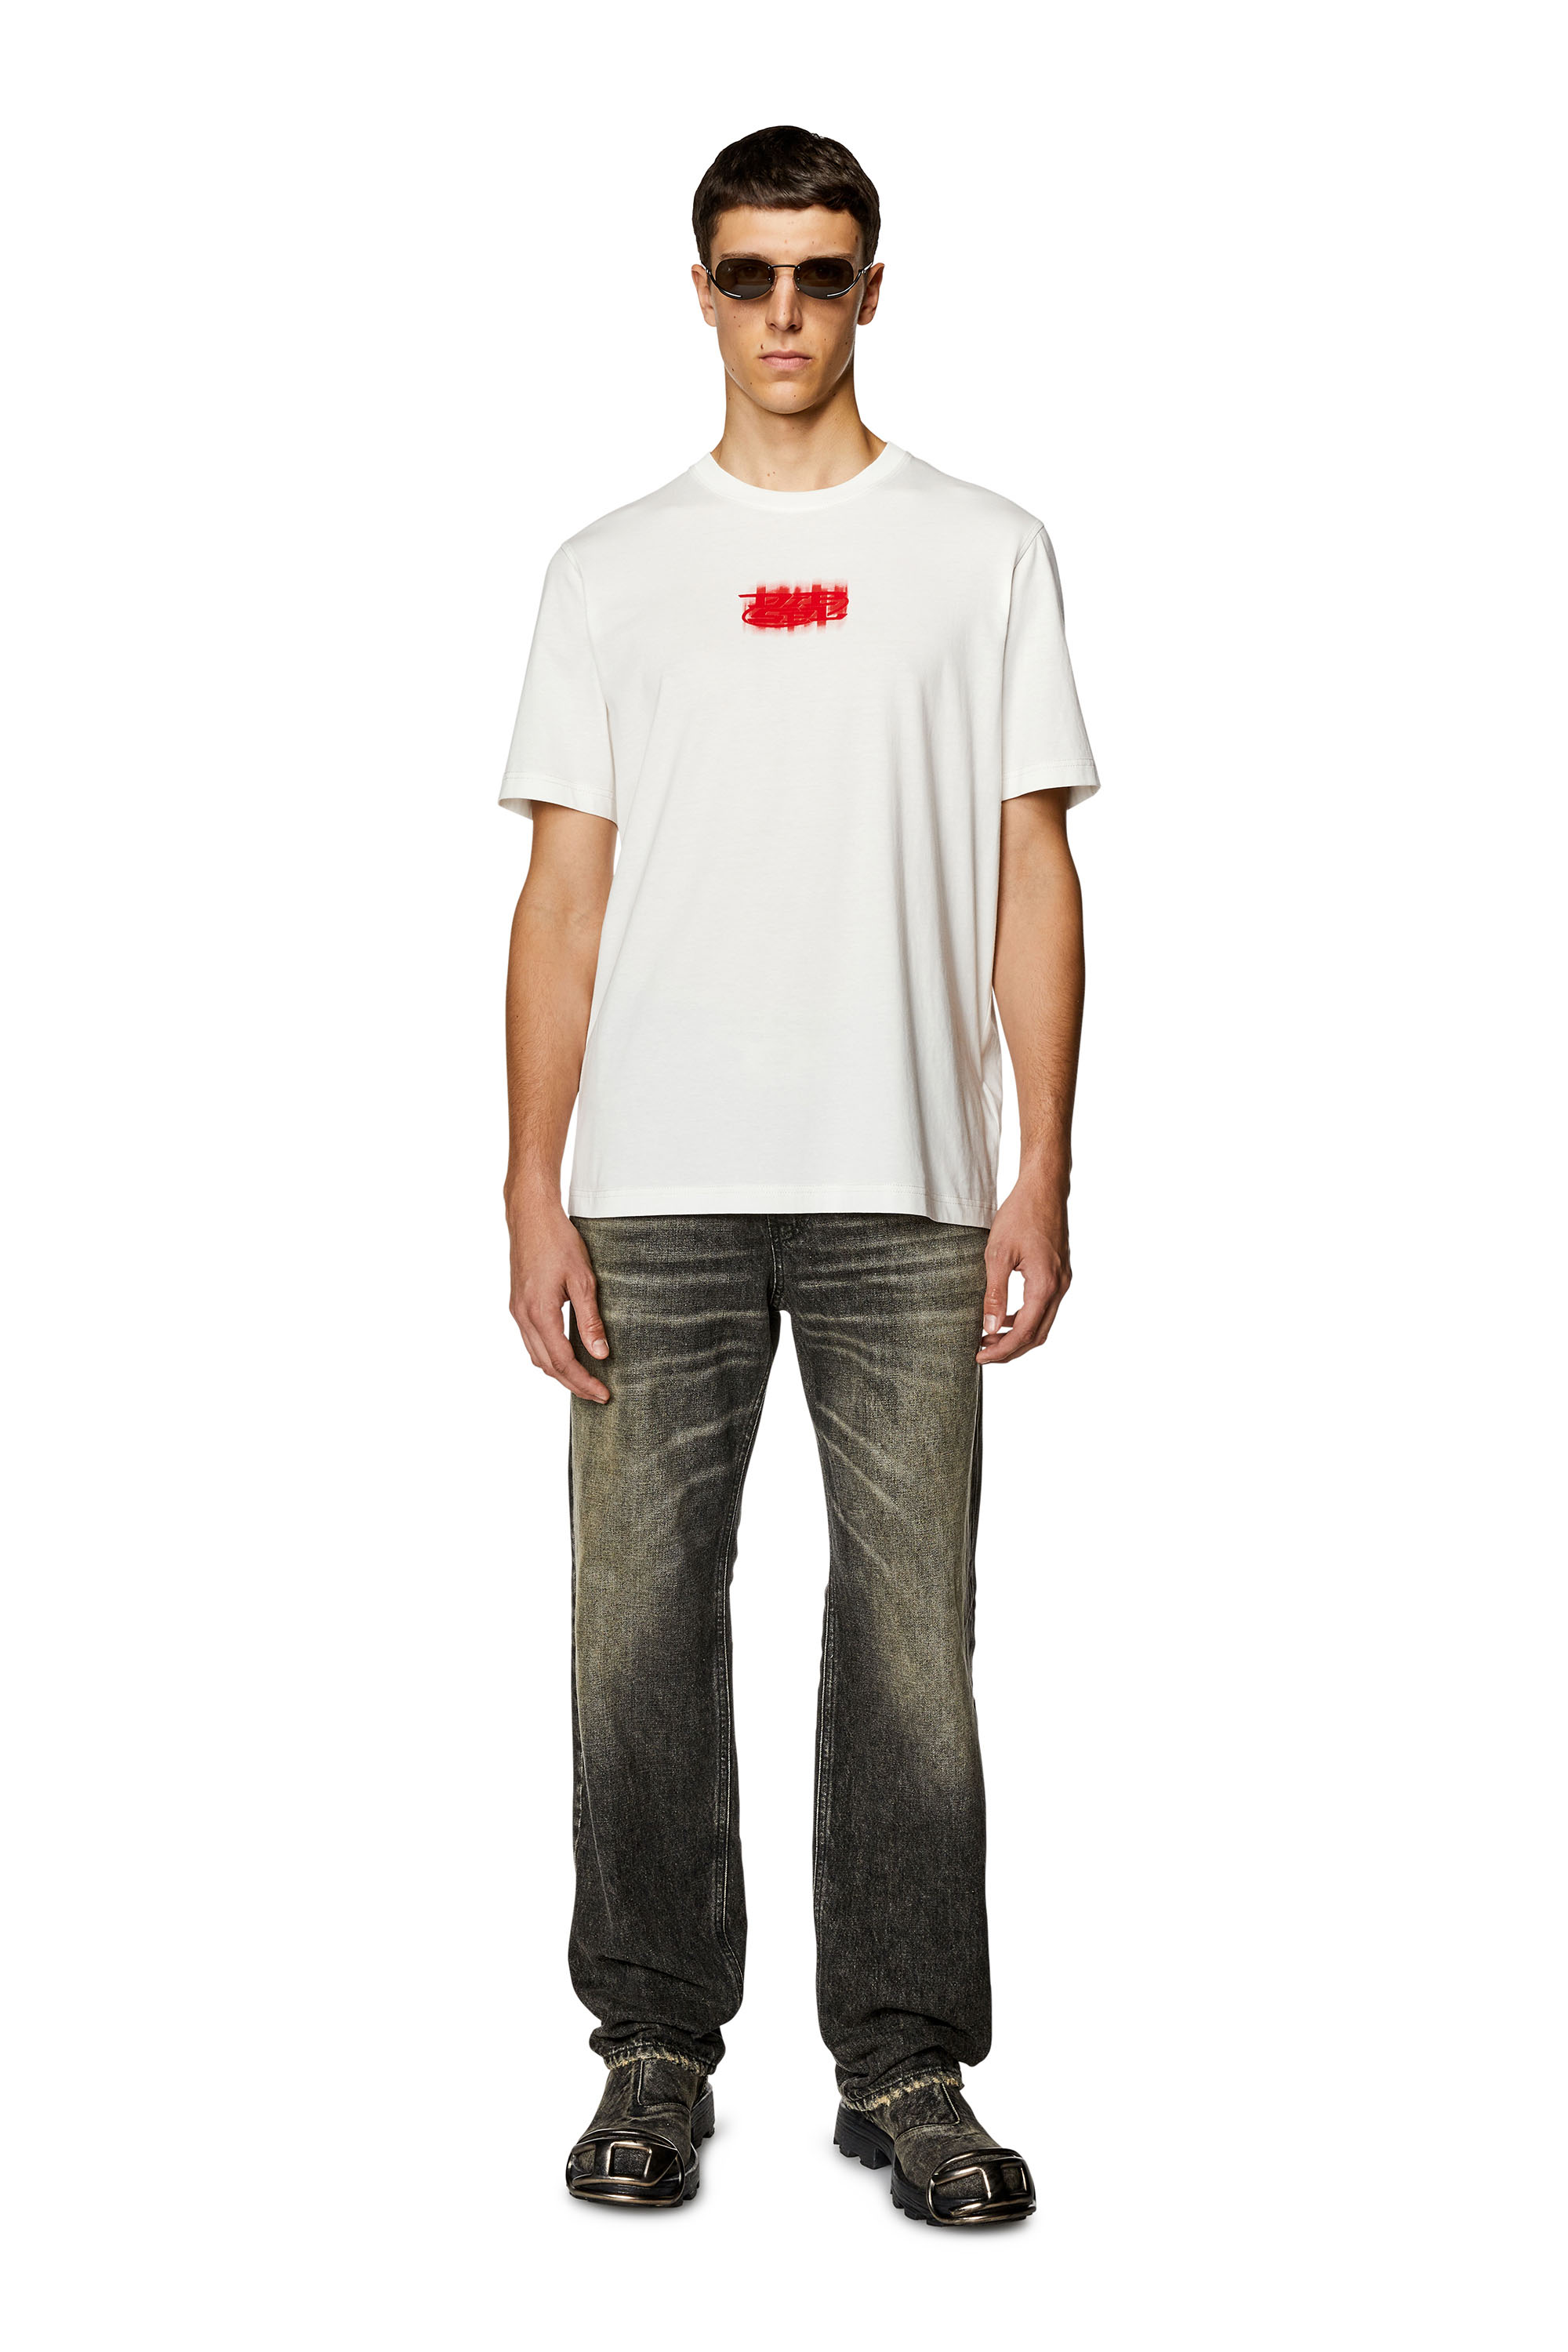 Diesel - T-JUST-N4, Man Logo-flocked T-shirt in organic cotton in White - Image 2